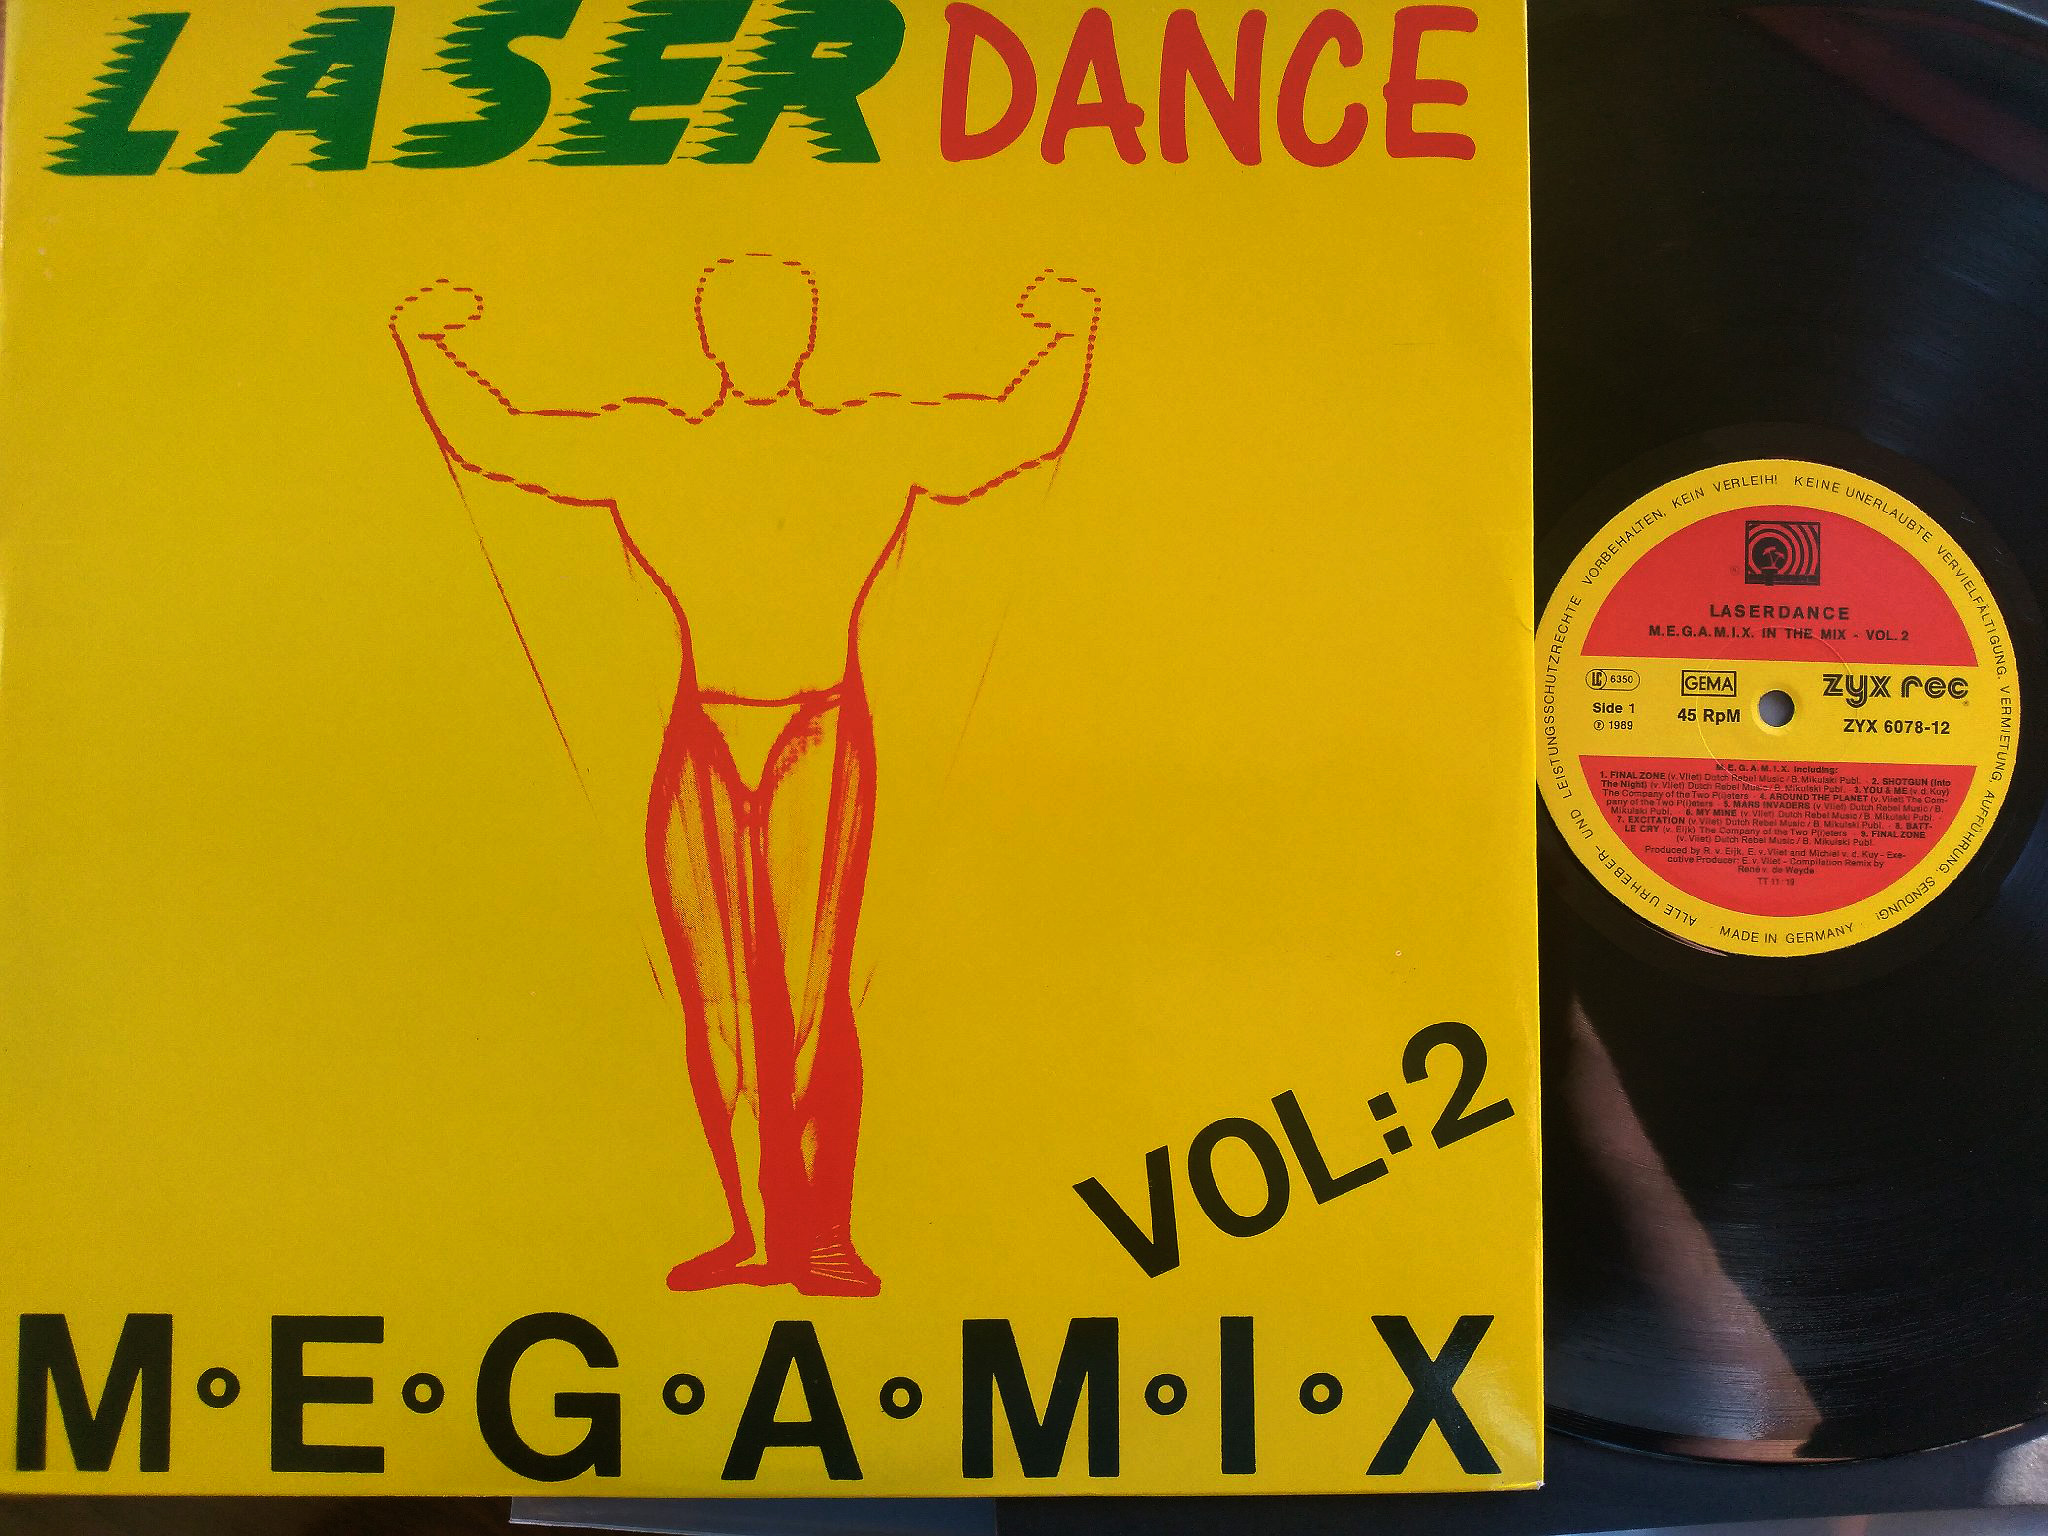 Laser Dance - Megamix Vol. 2